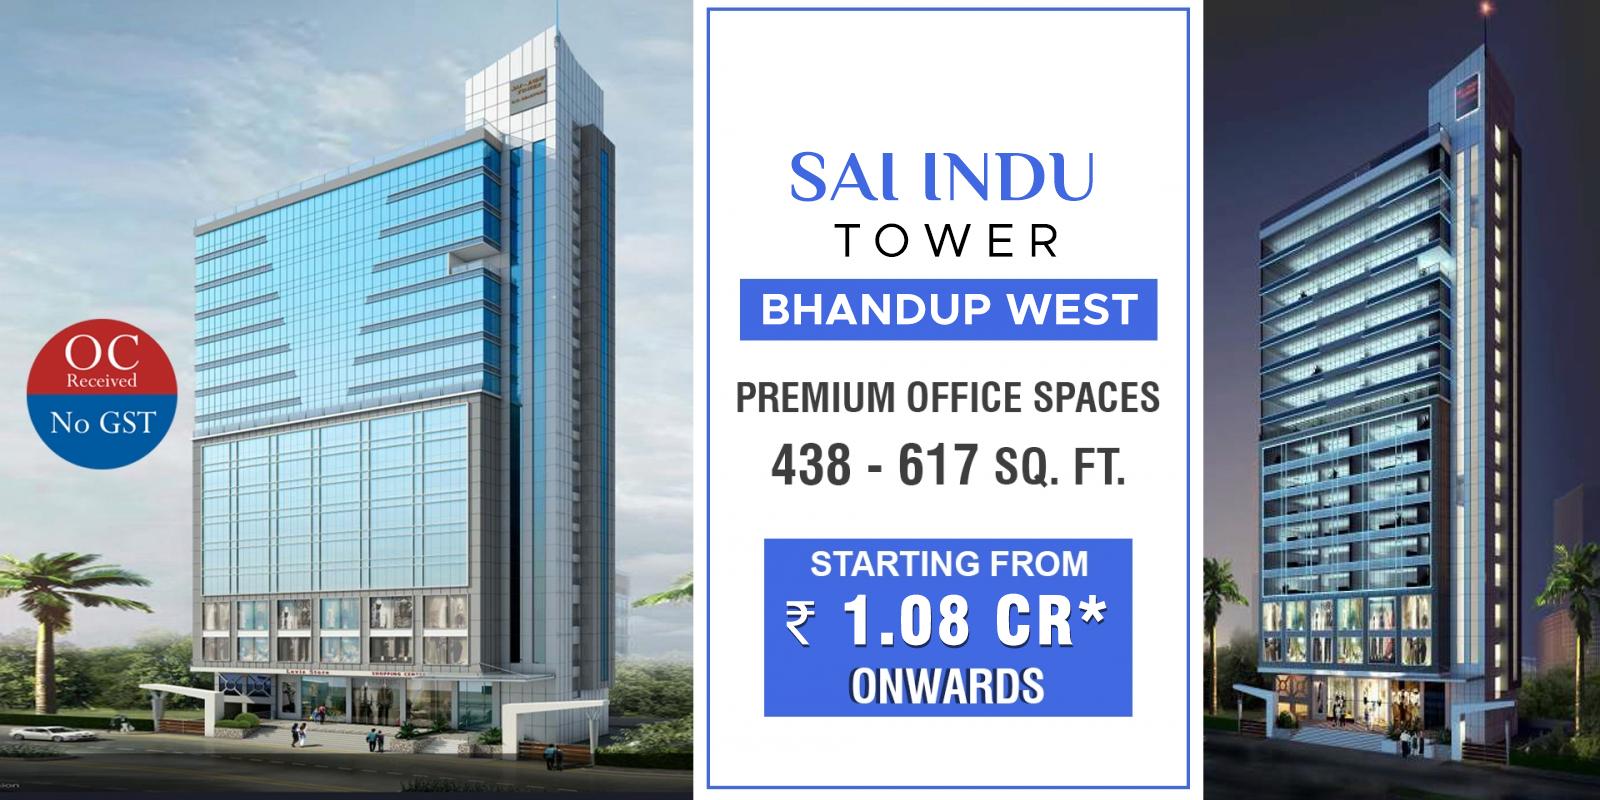 Sai Indu Tower Bhandup West Lbs Road-sai-indu-tower-bhandup-west-banner.jpg